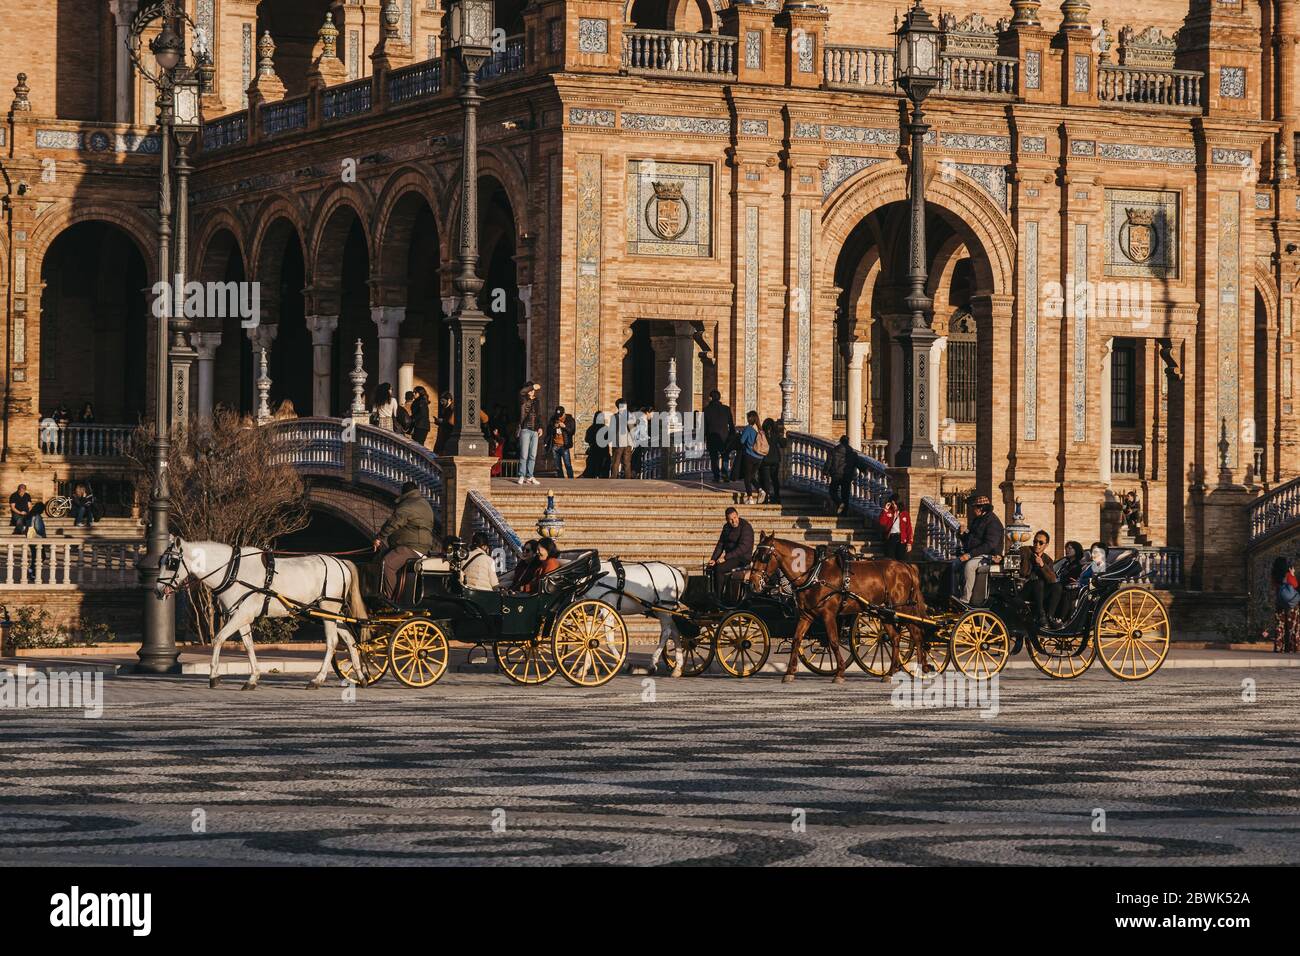 Seville, Spain - January 17, 2020: Horse-drawn carriages city tour on Plaza de España, a plaza in the Parque de María Luisa, in Seville, Spain, built Stock Photo